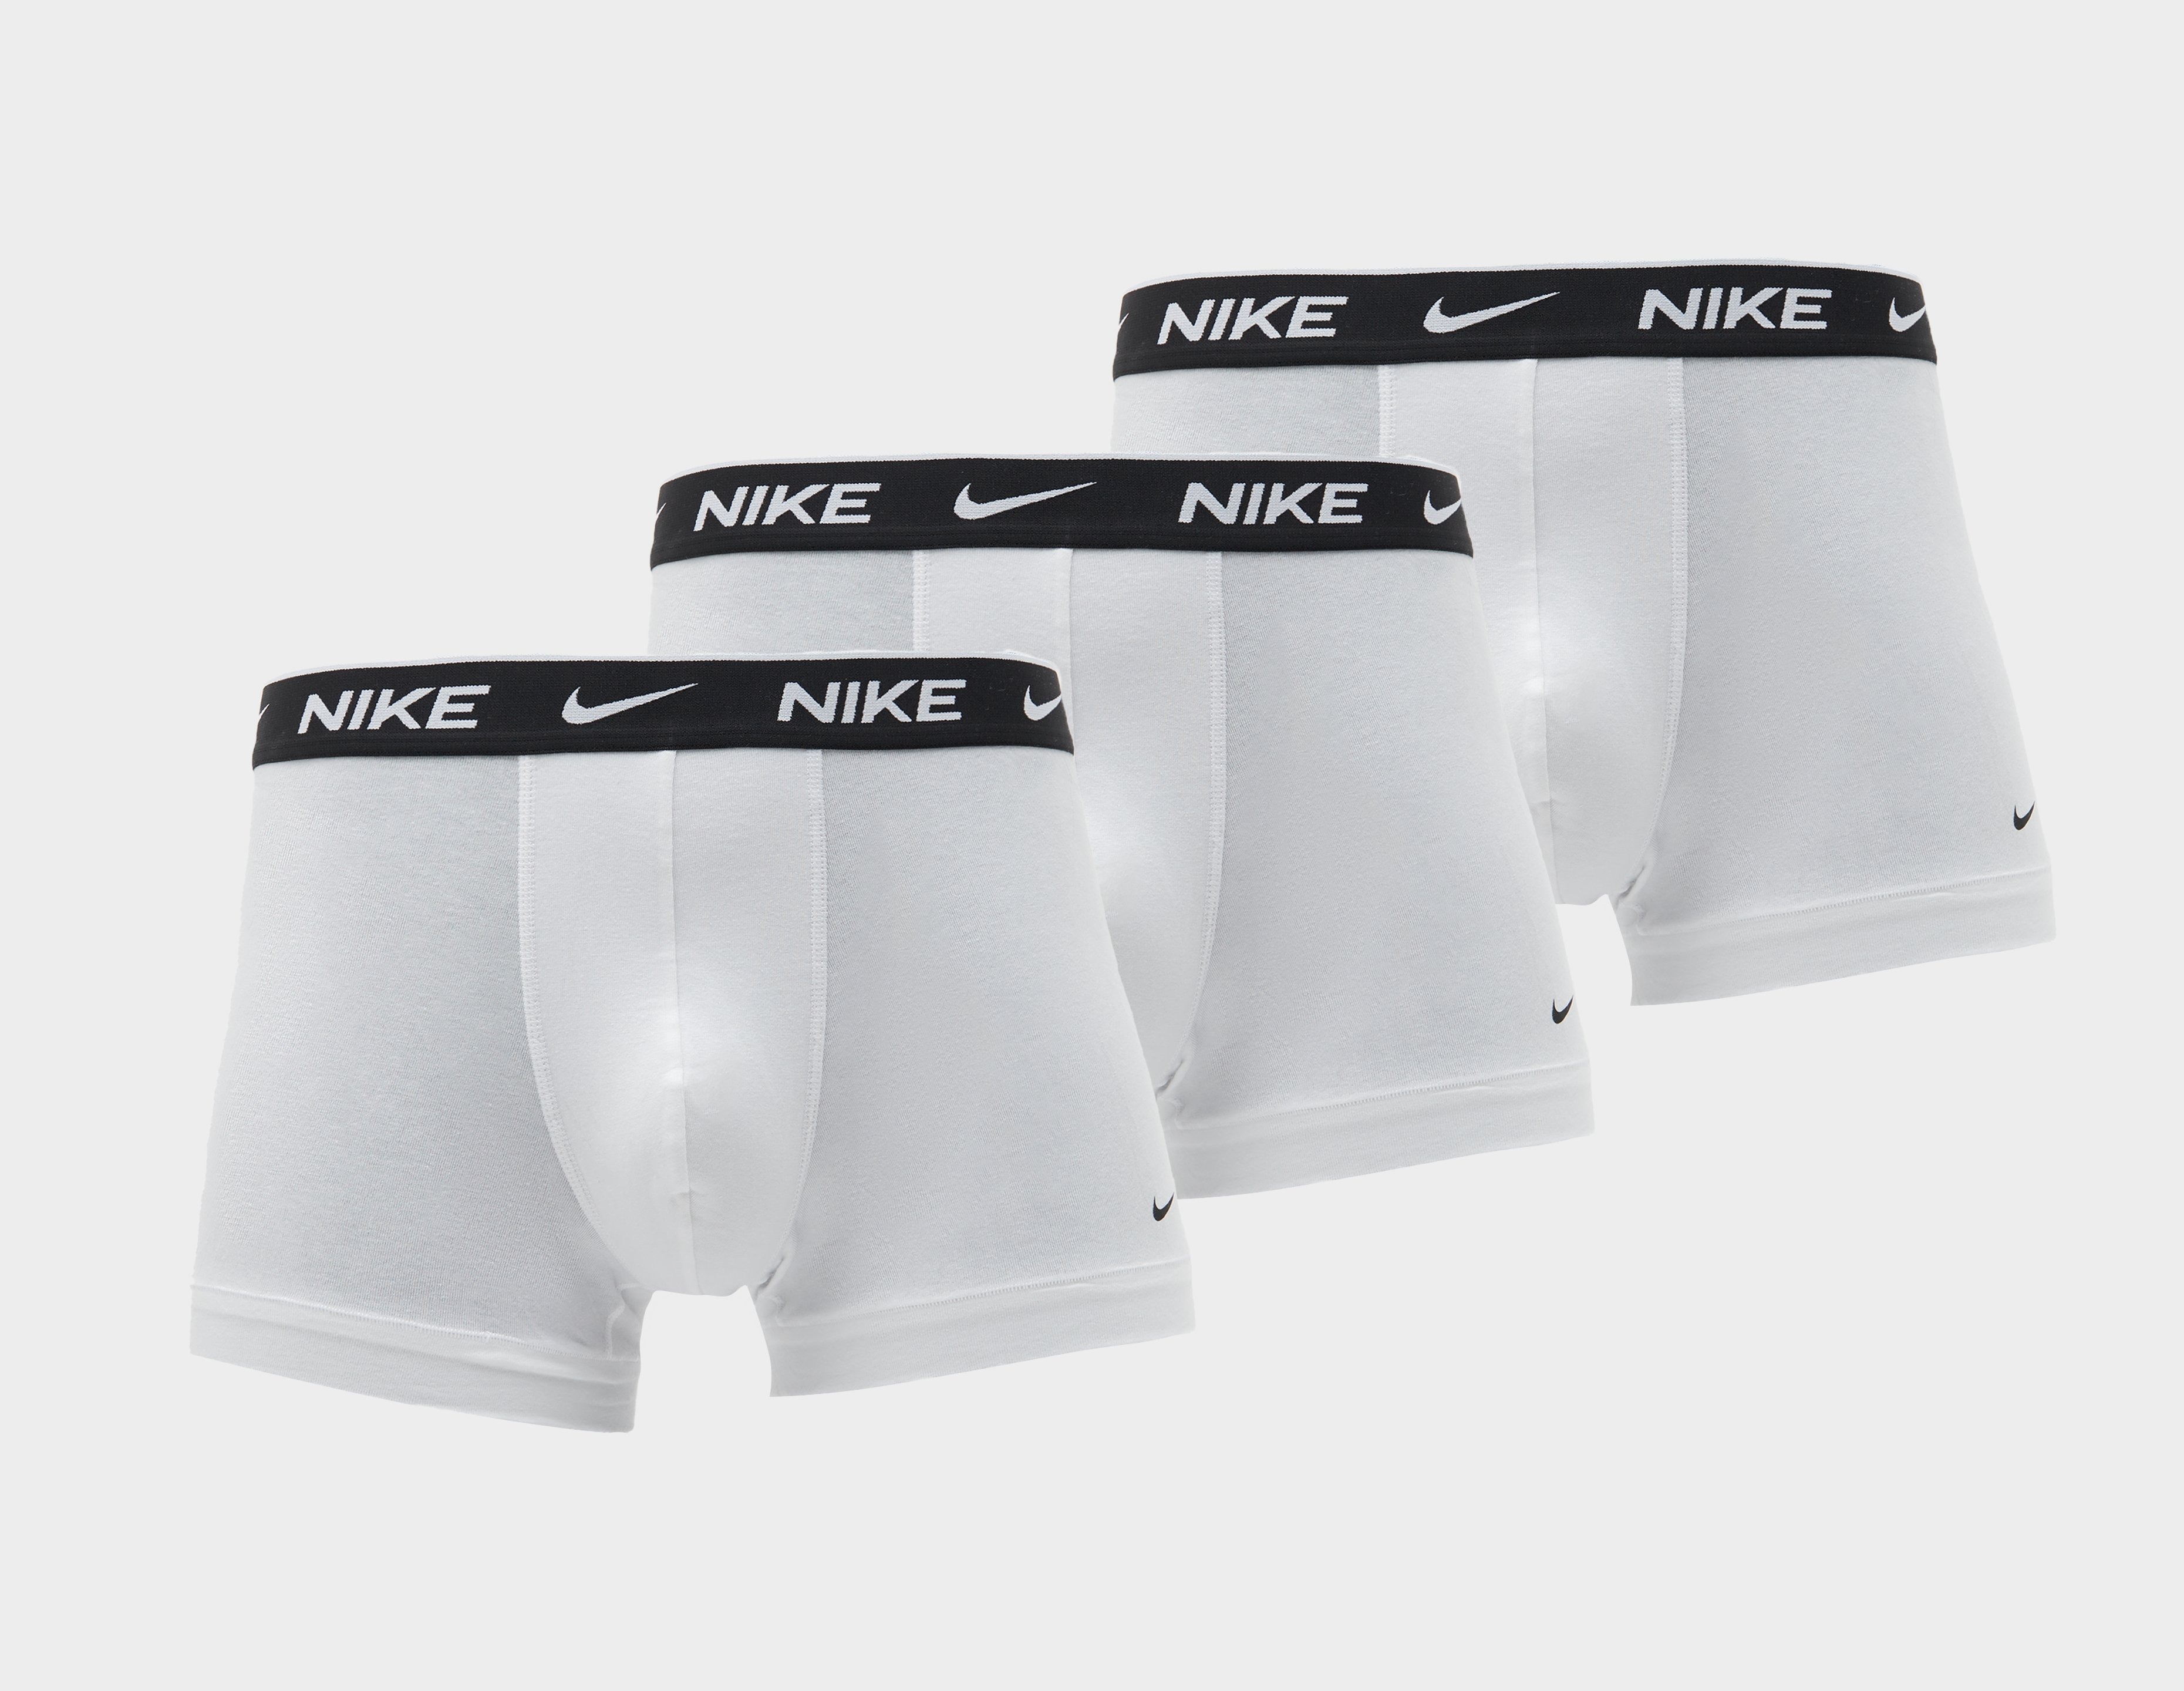 Nike boxer brief 3 pack in grey